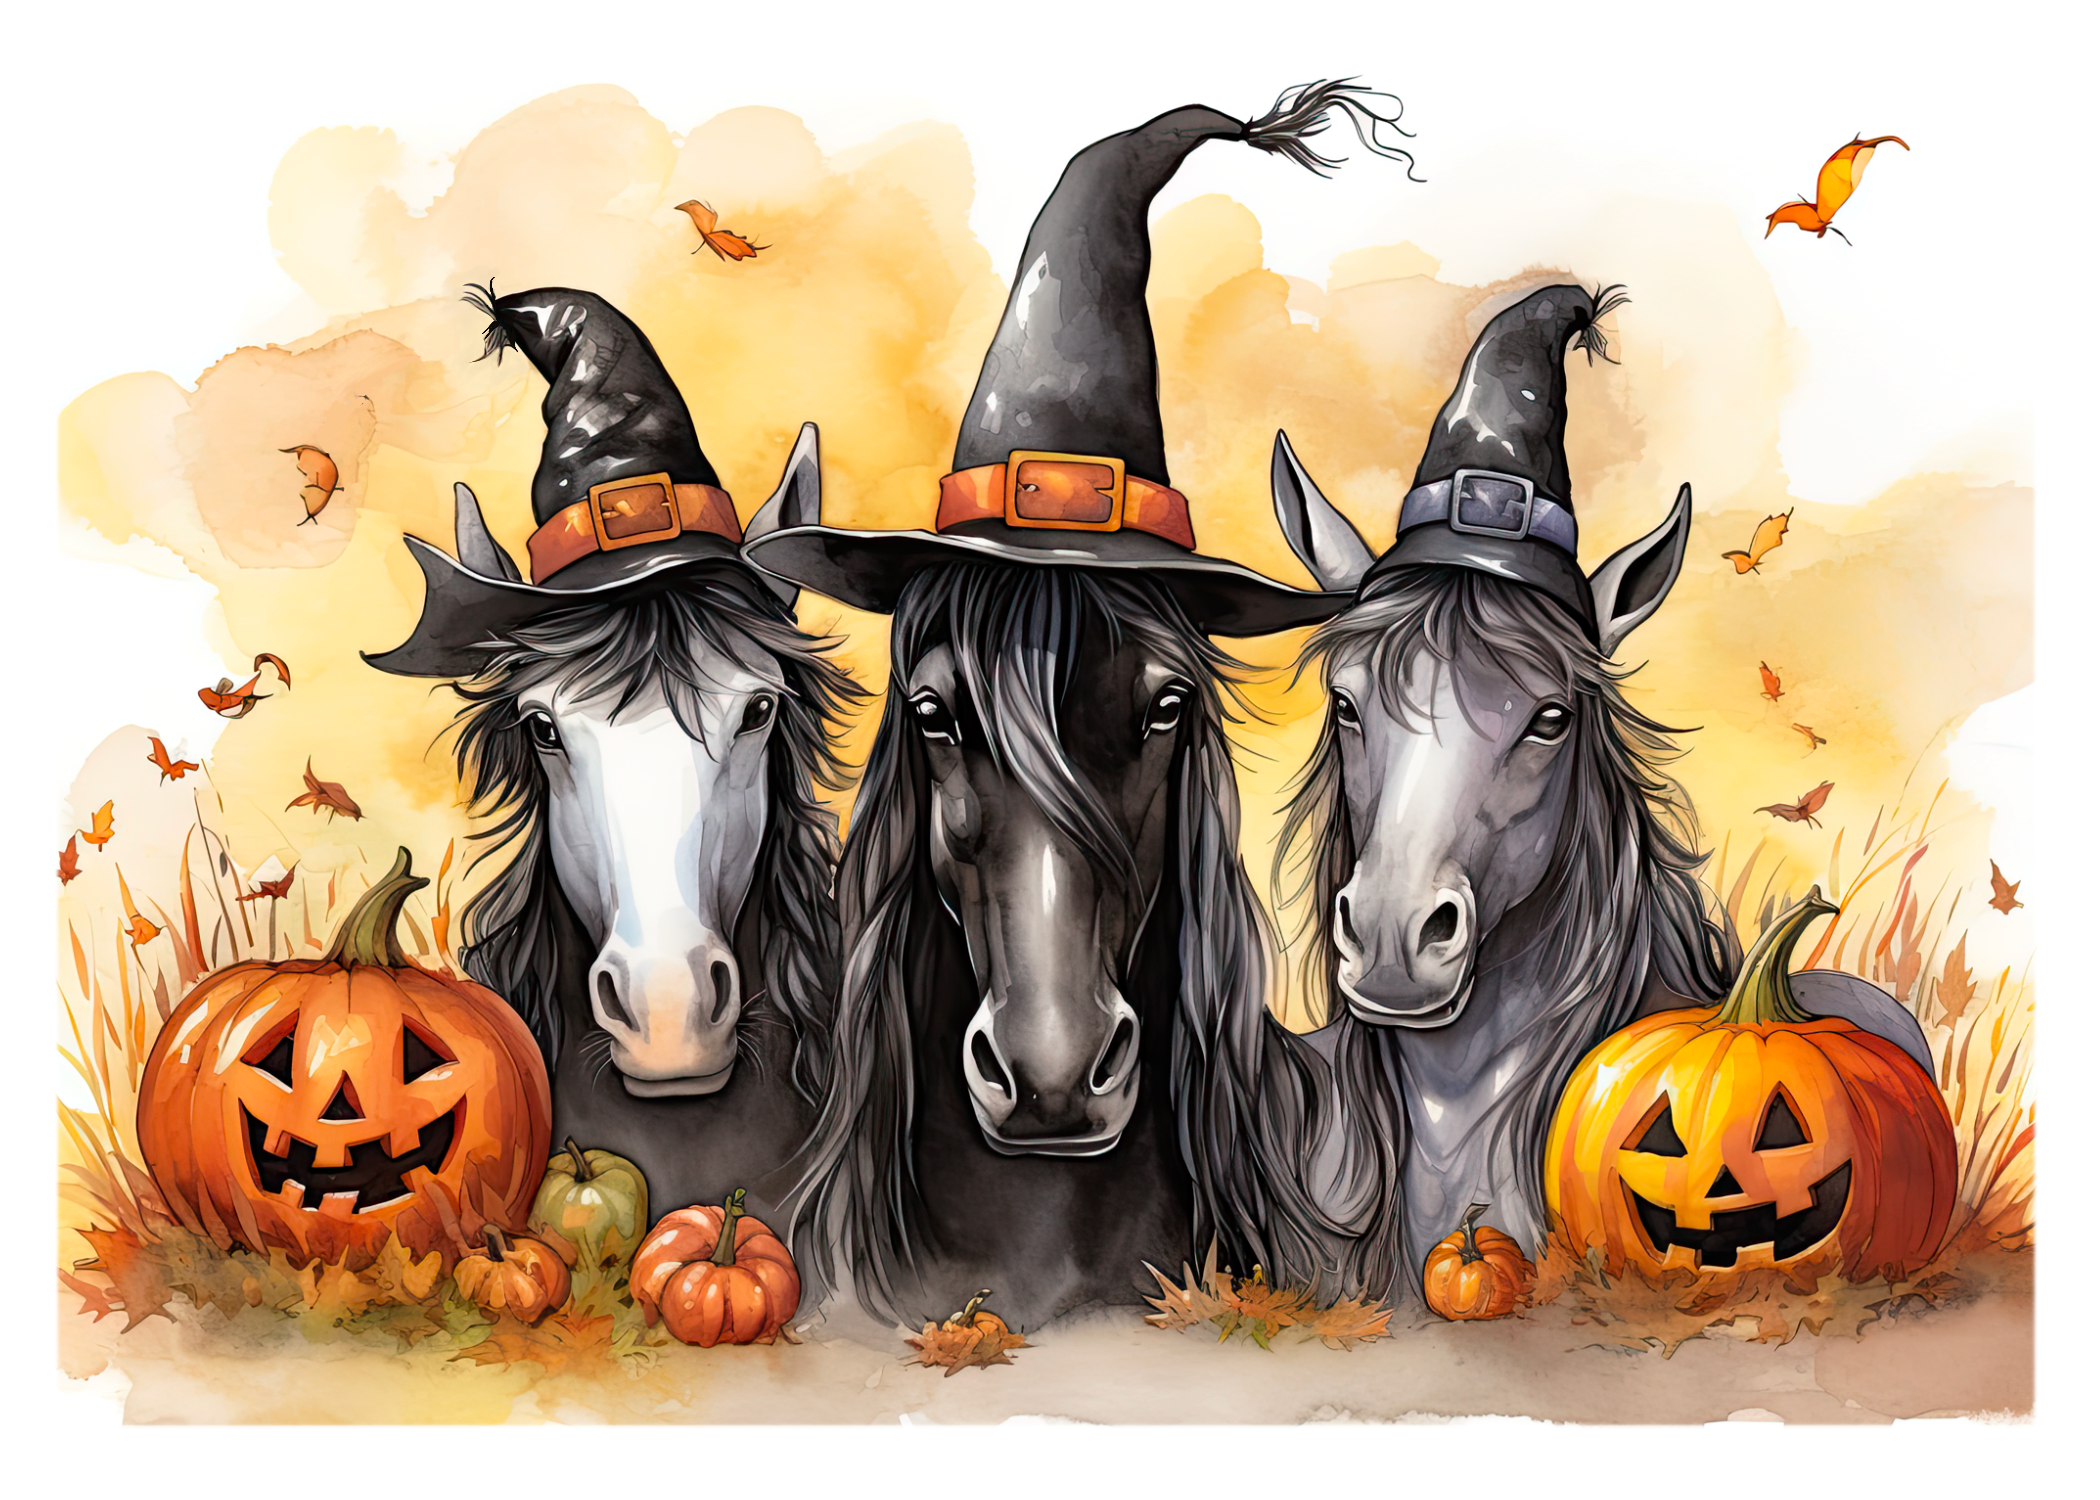 Horsey Pocus Halloween Greeting Card 